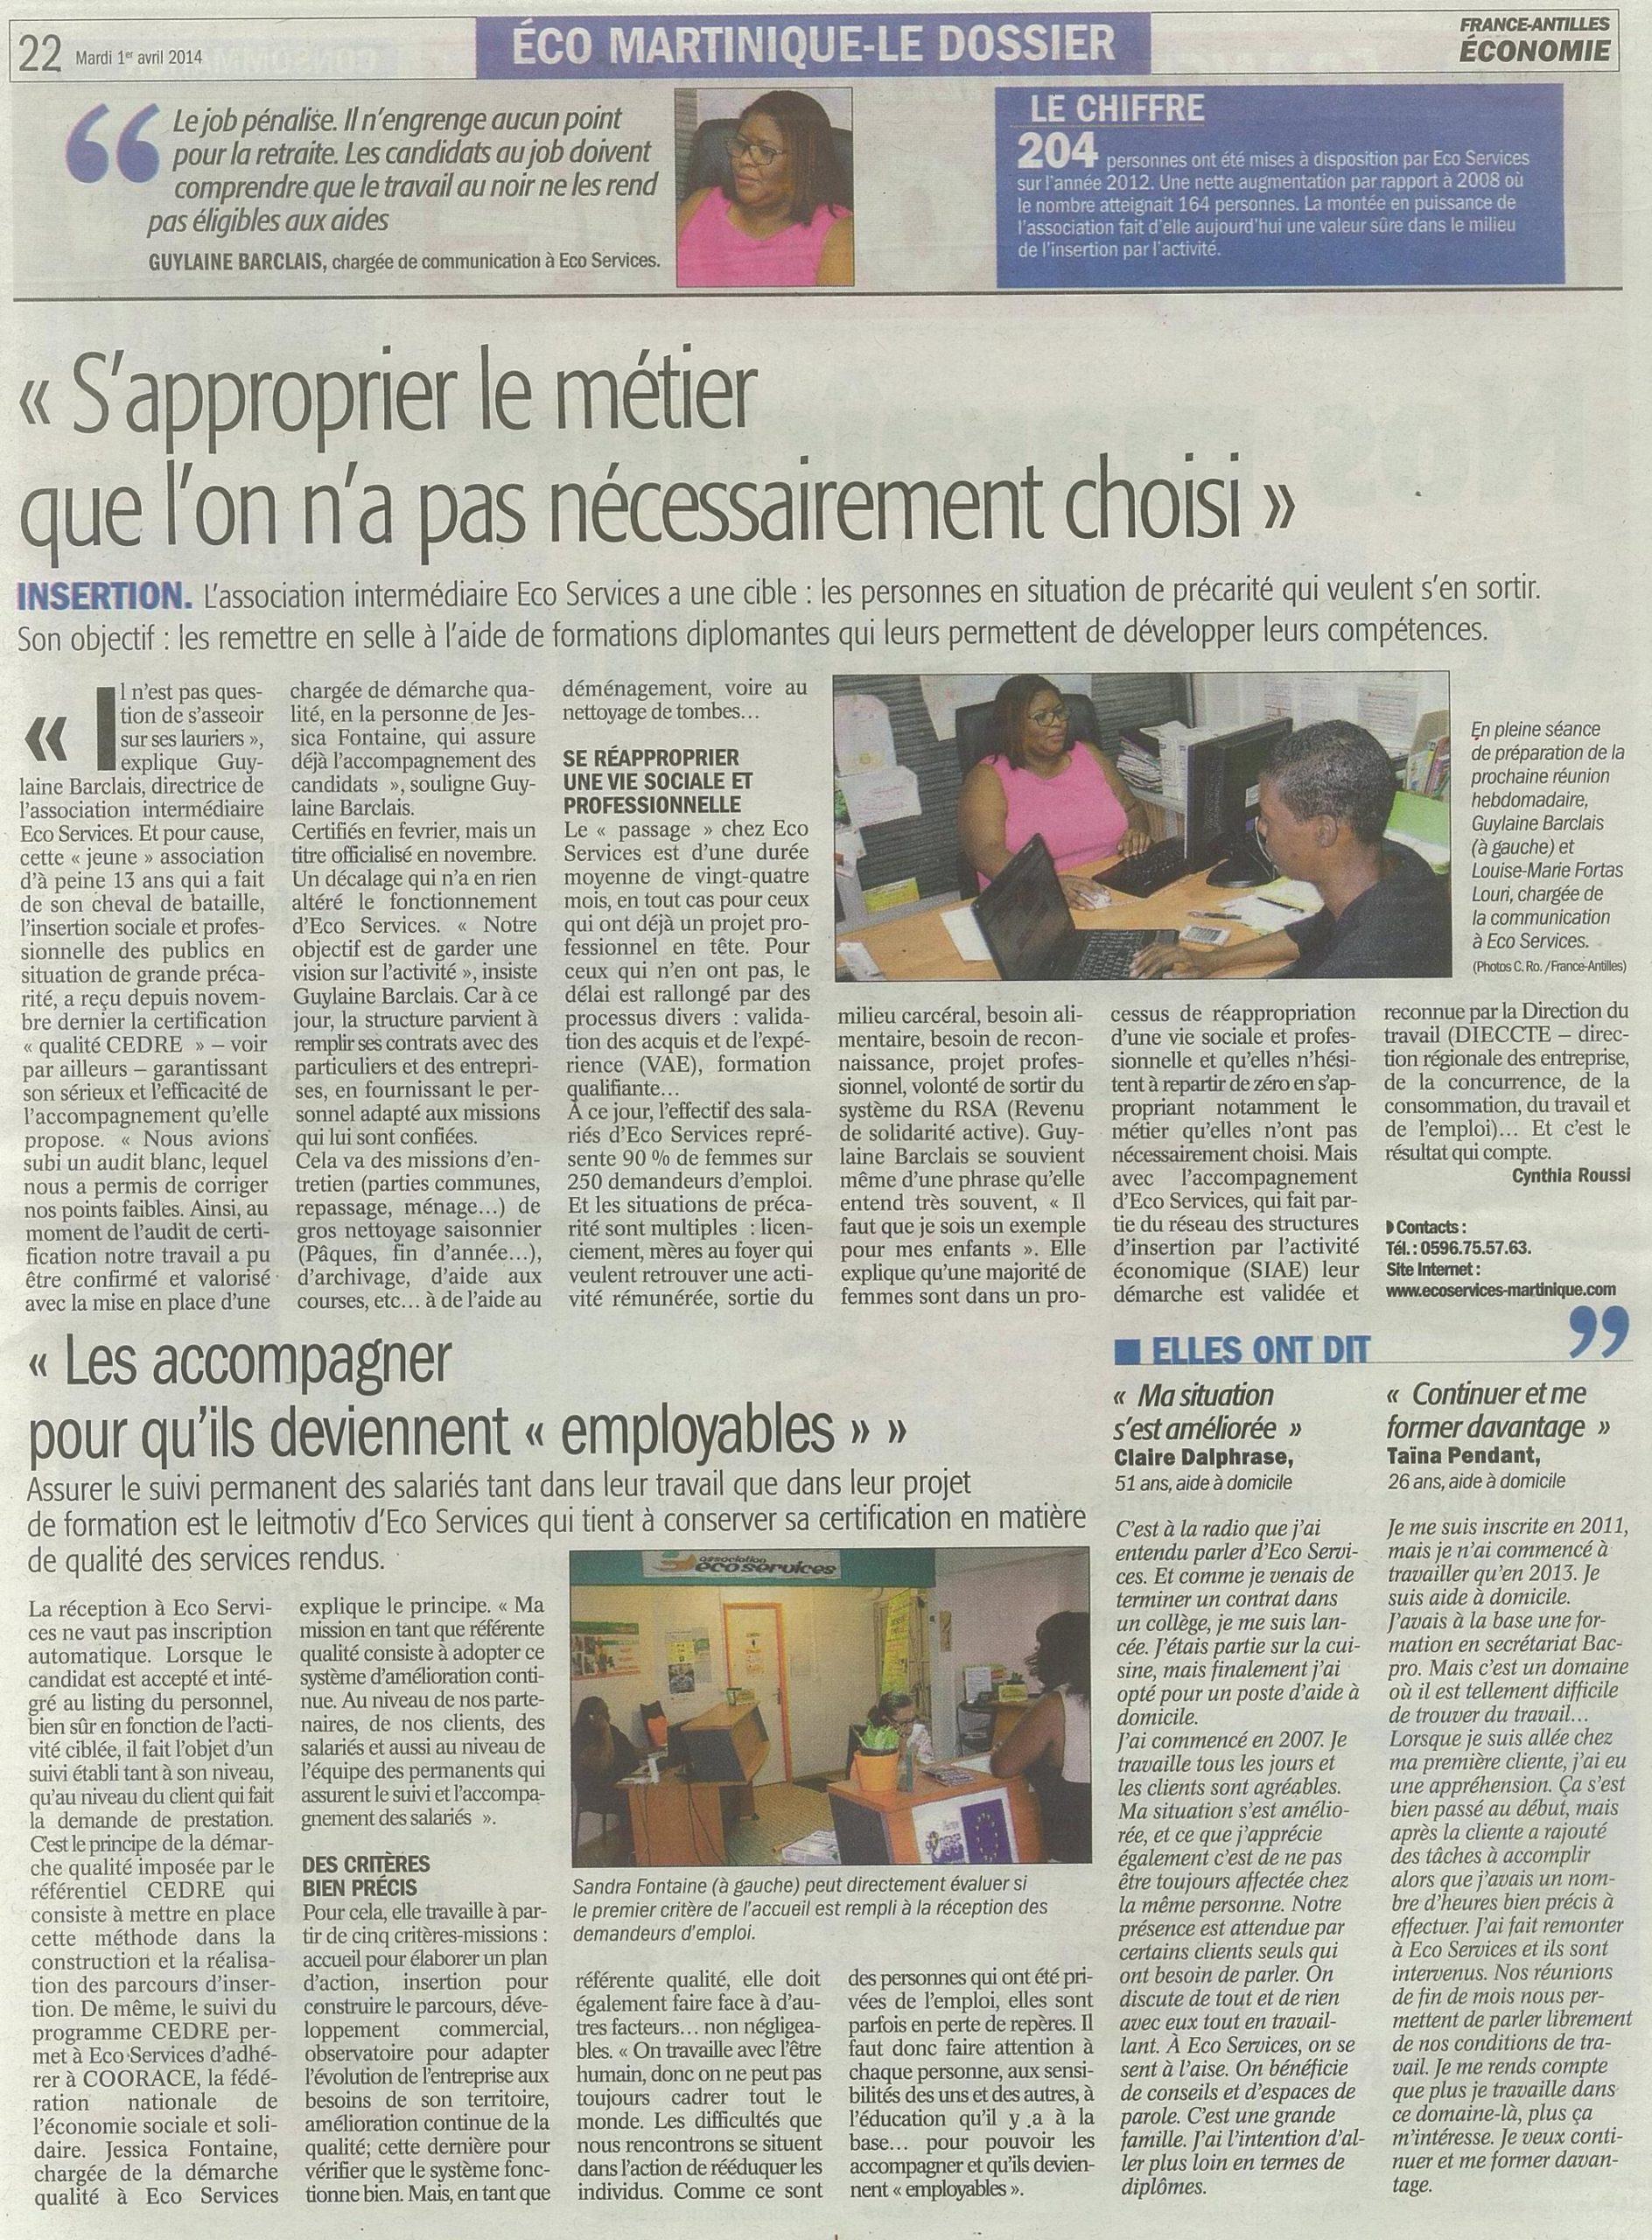 Ecoservices Martinique dans la presse #1